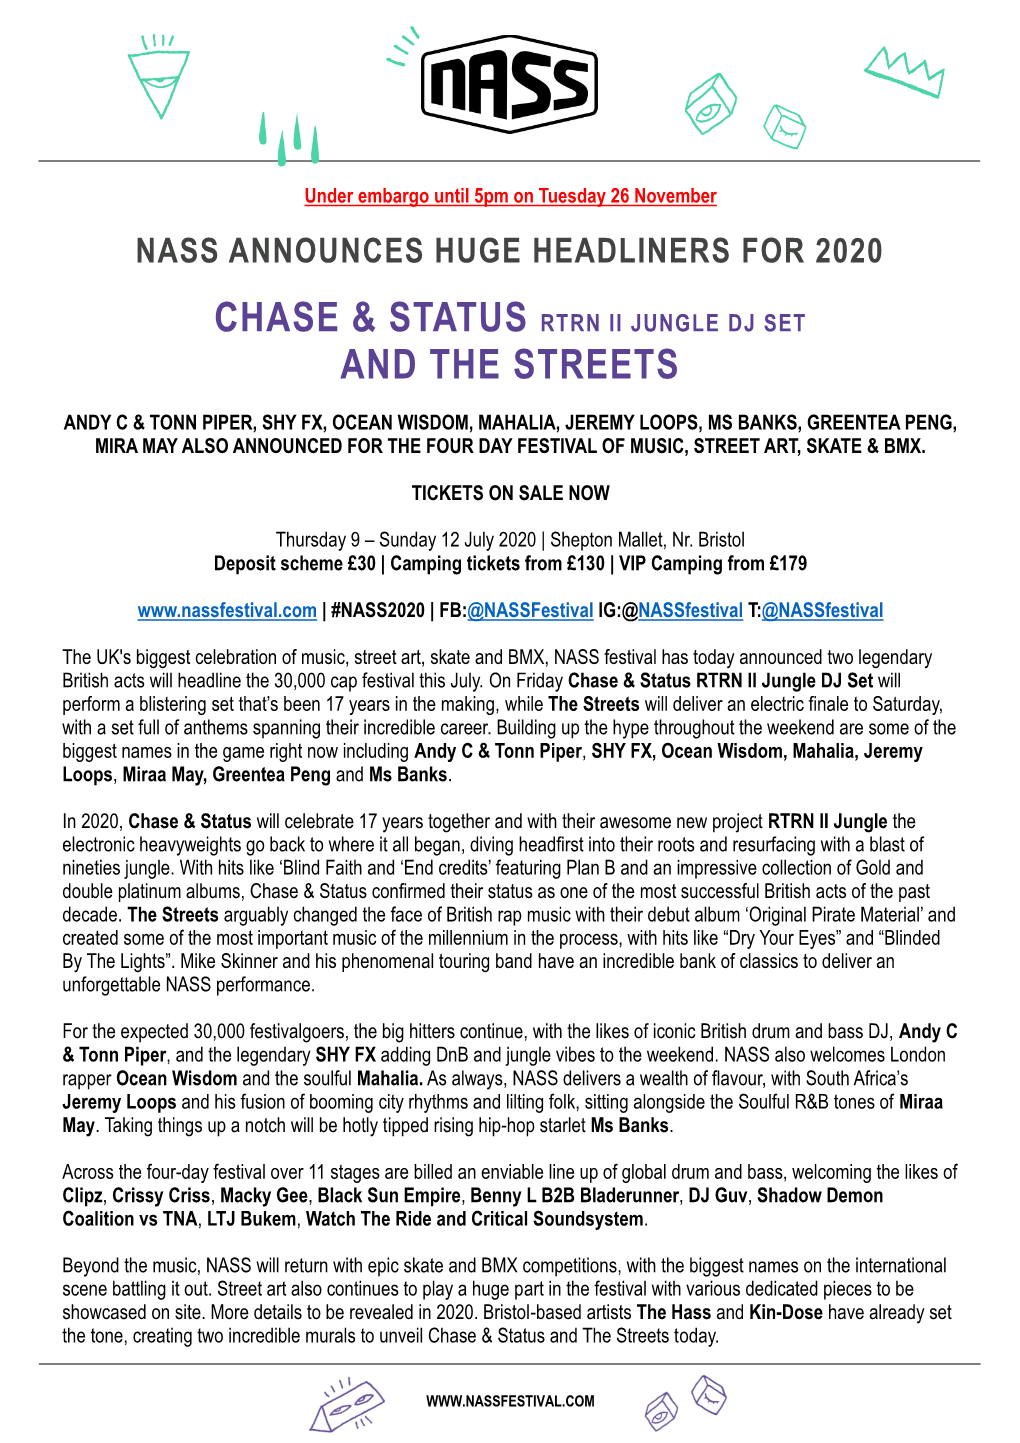 Nass Announces Huge Headliners for 2020 Chase & Status Rtrn Ii Jungle Dj